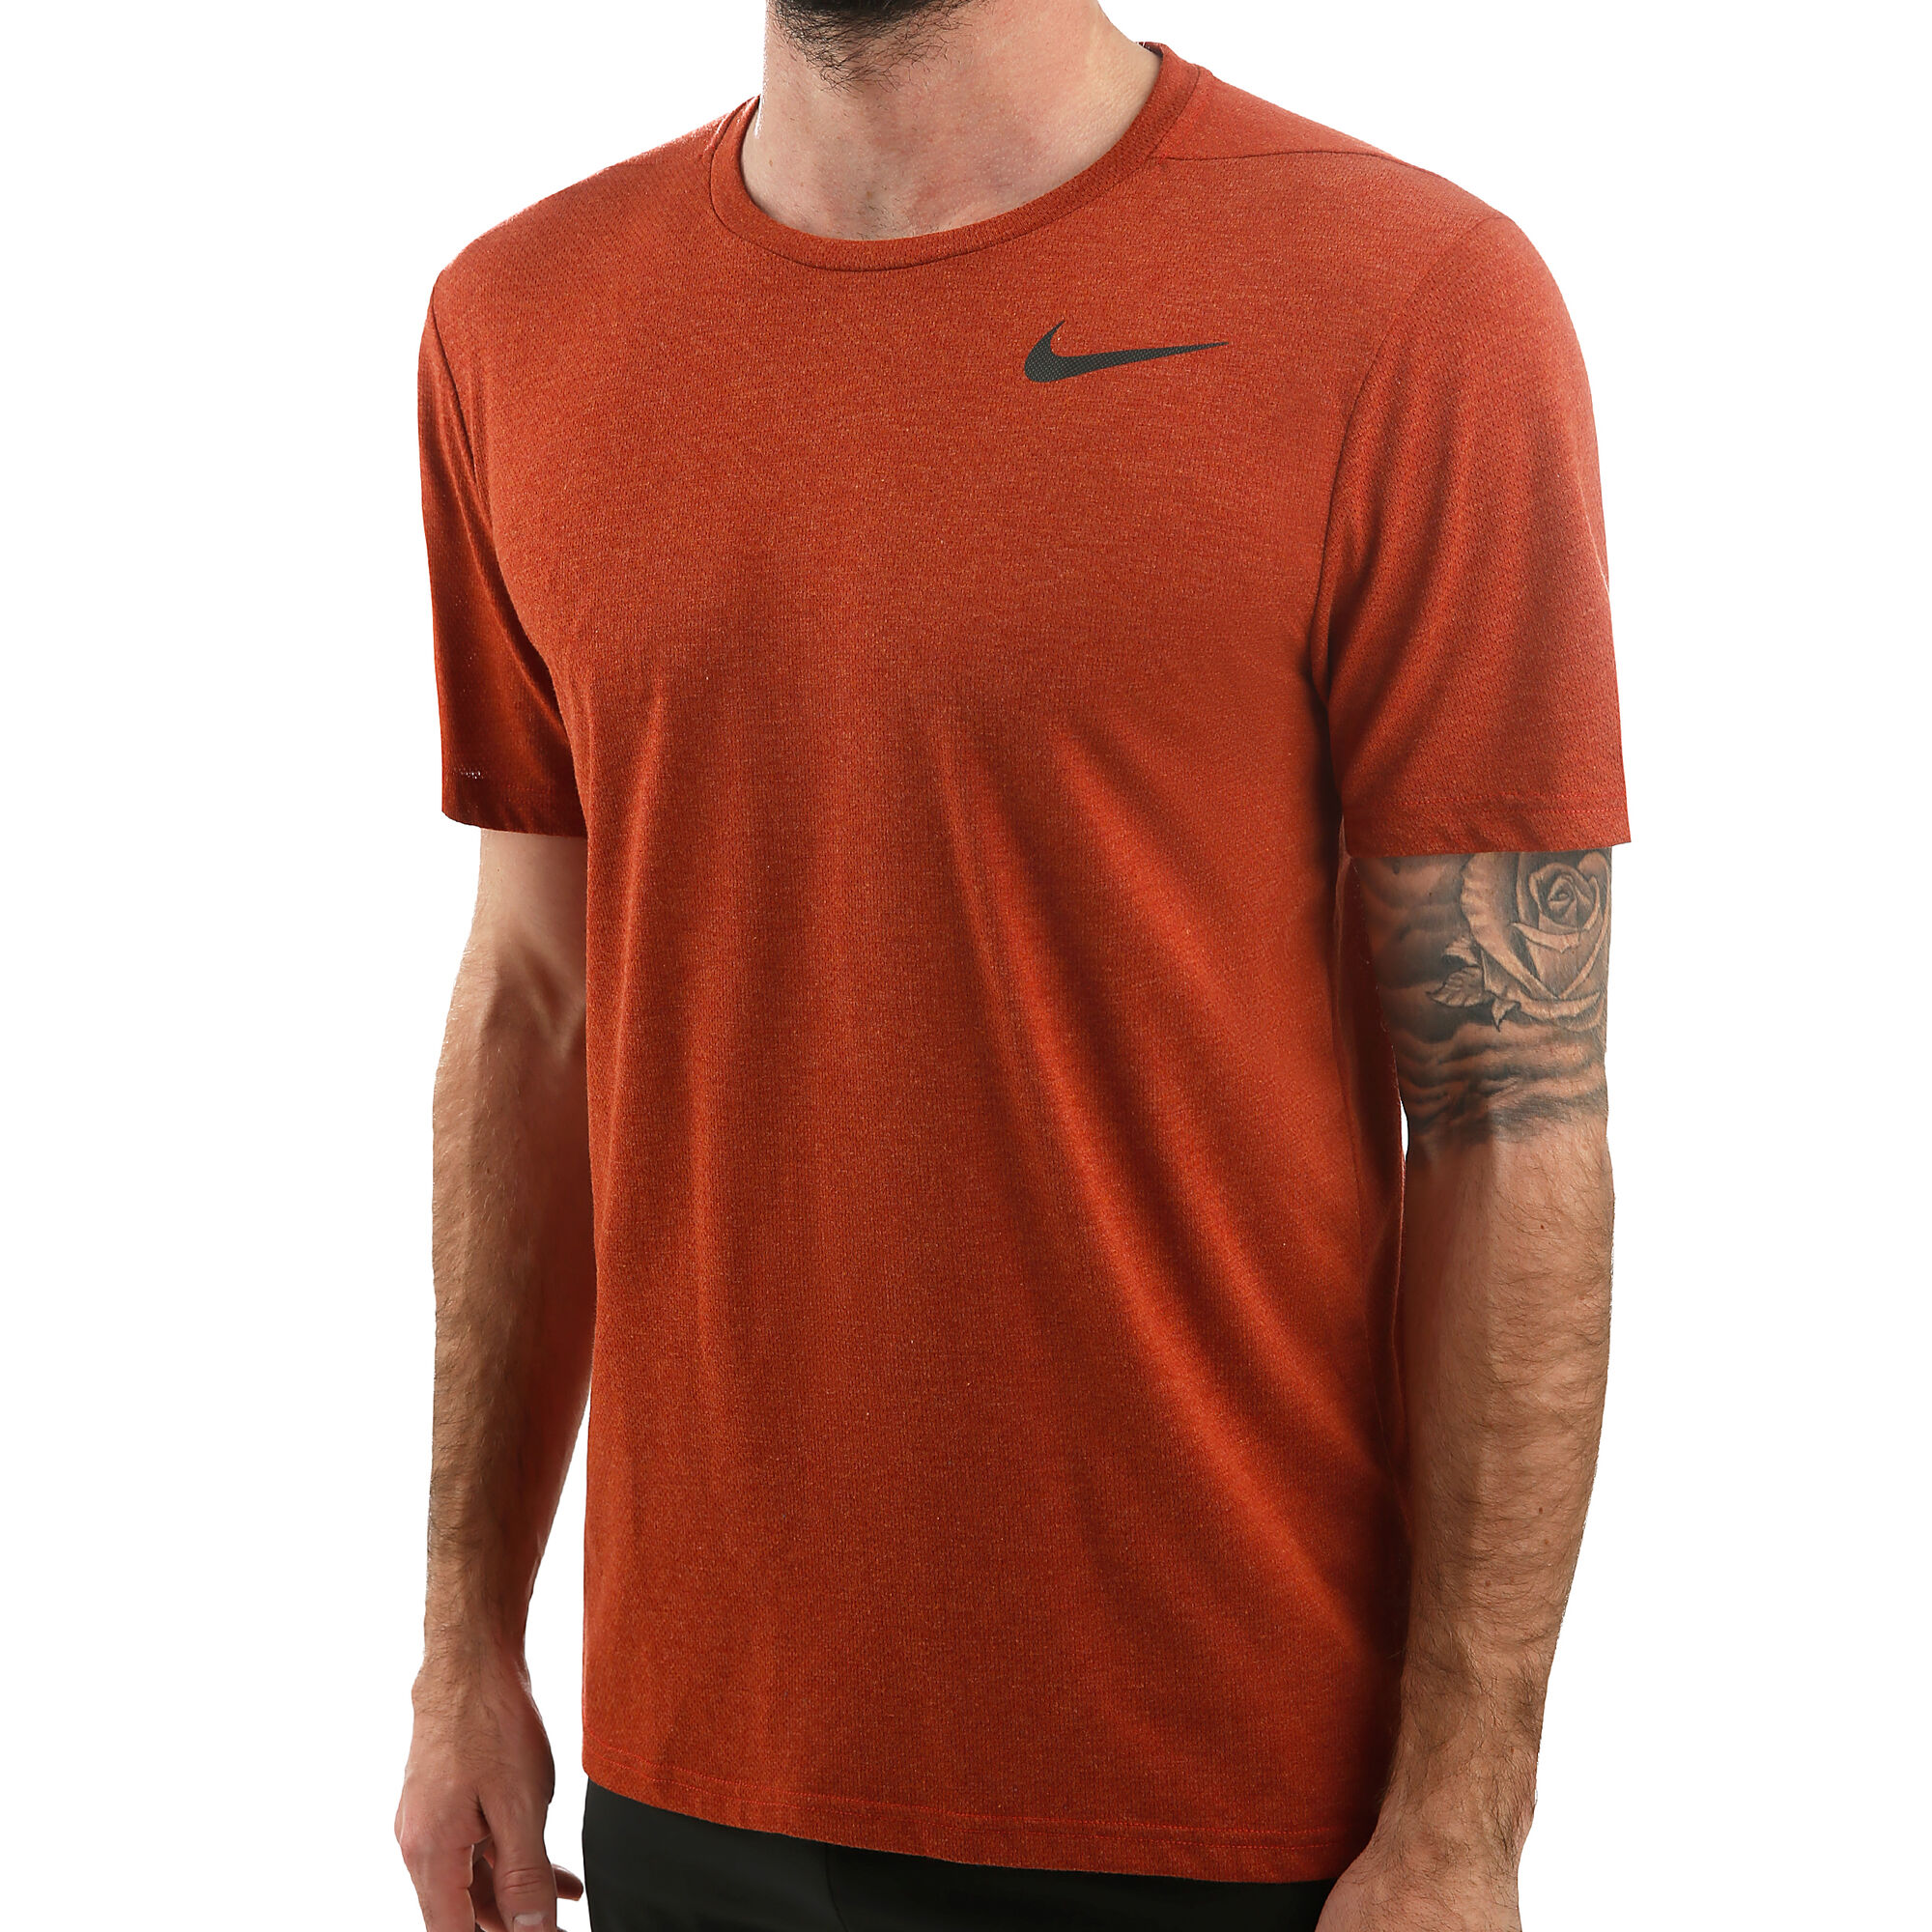 Preconcepción ventana heredar buy Nike Dri-Fit Breathe T-Shirt Men - Red, Black online | Tennis-Point